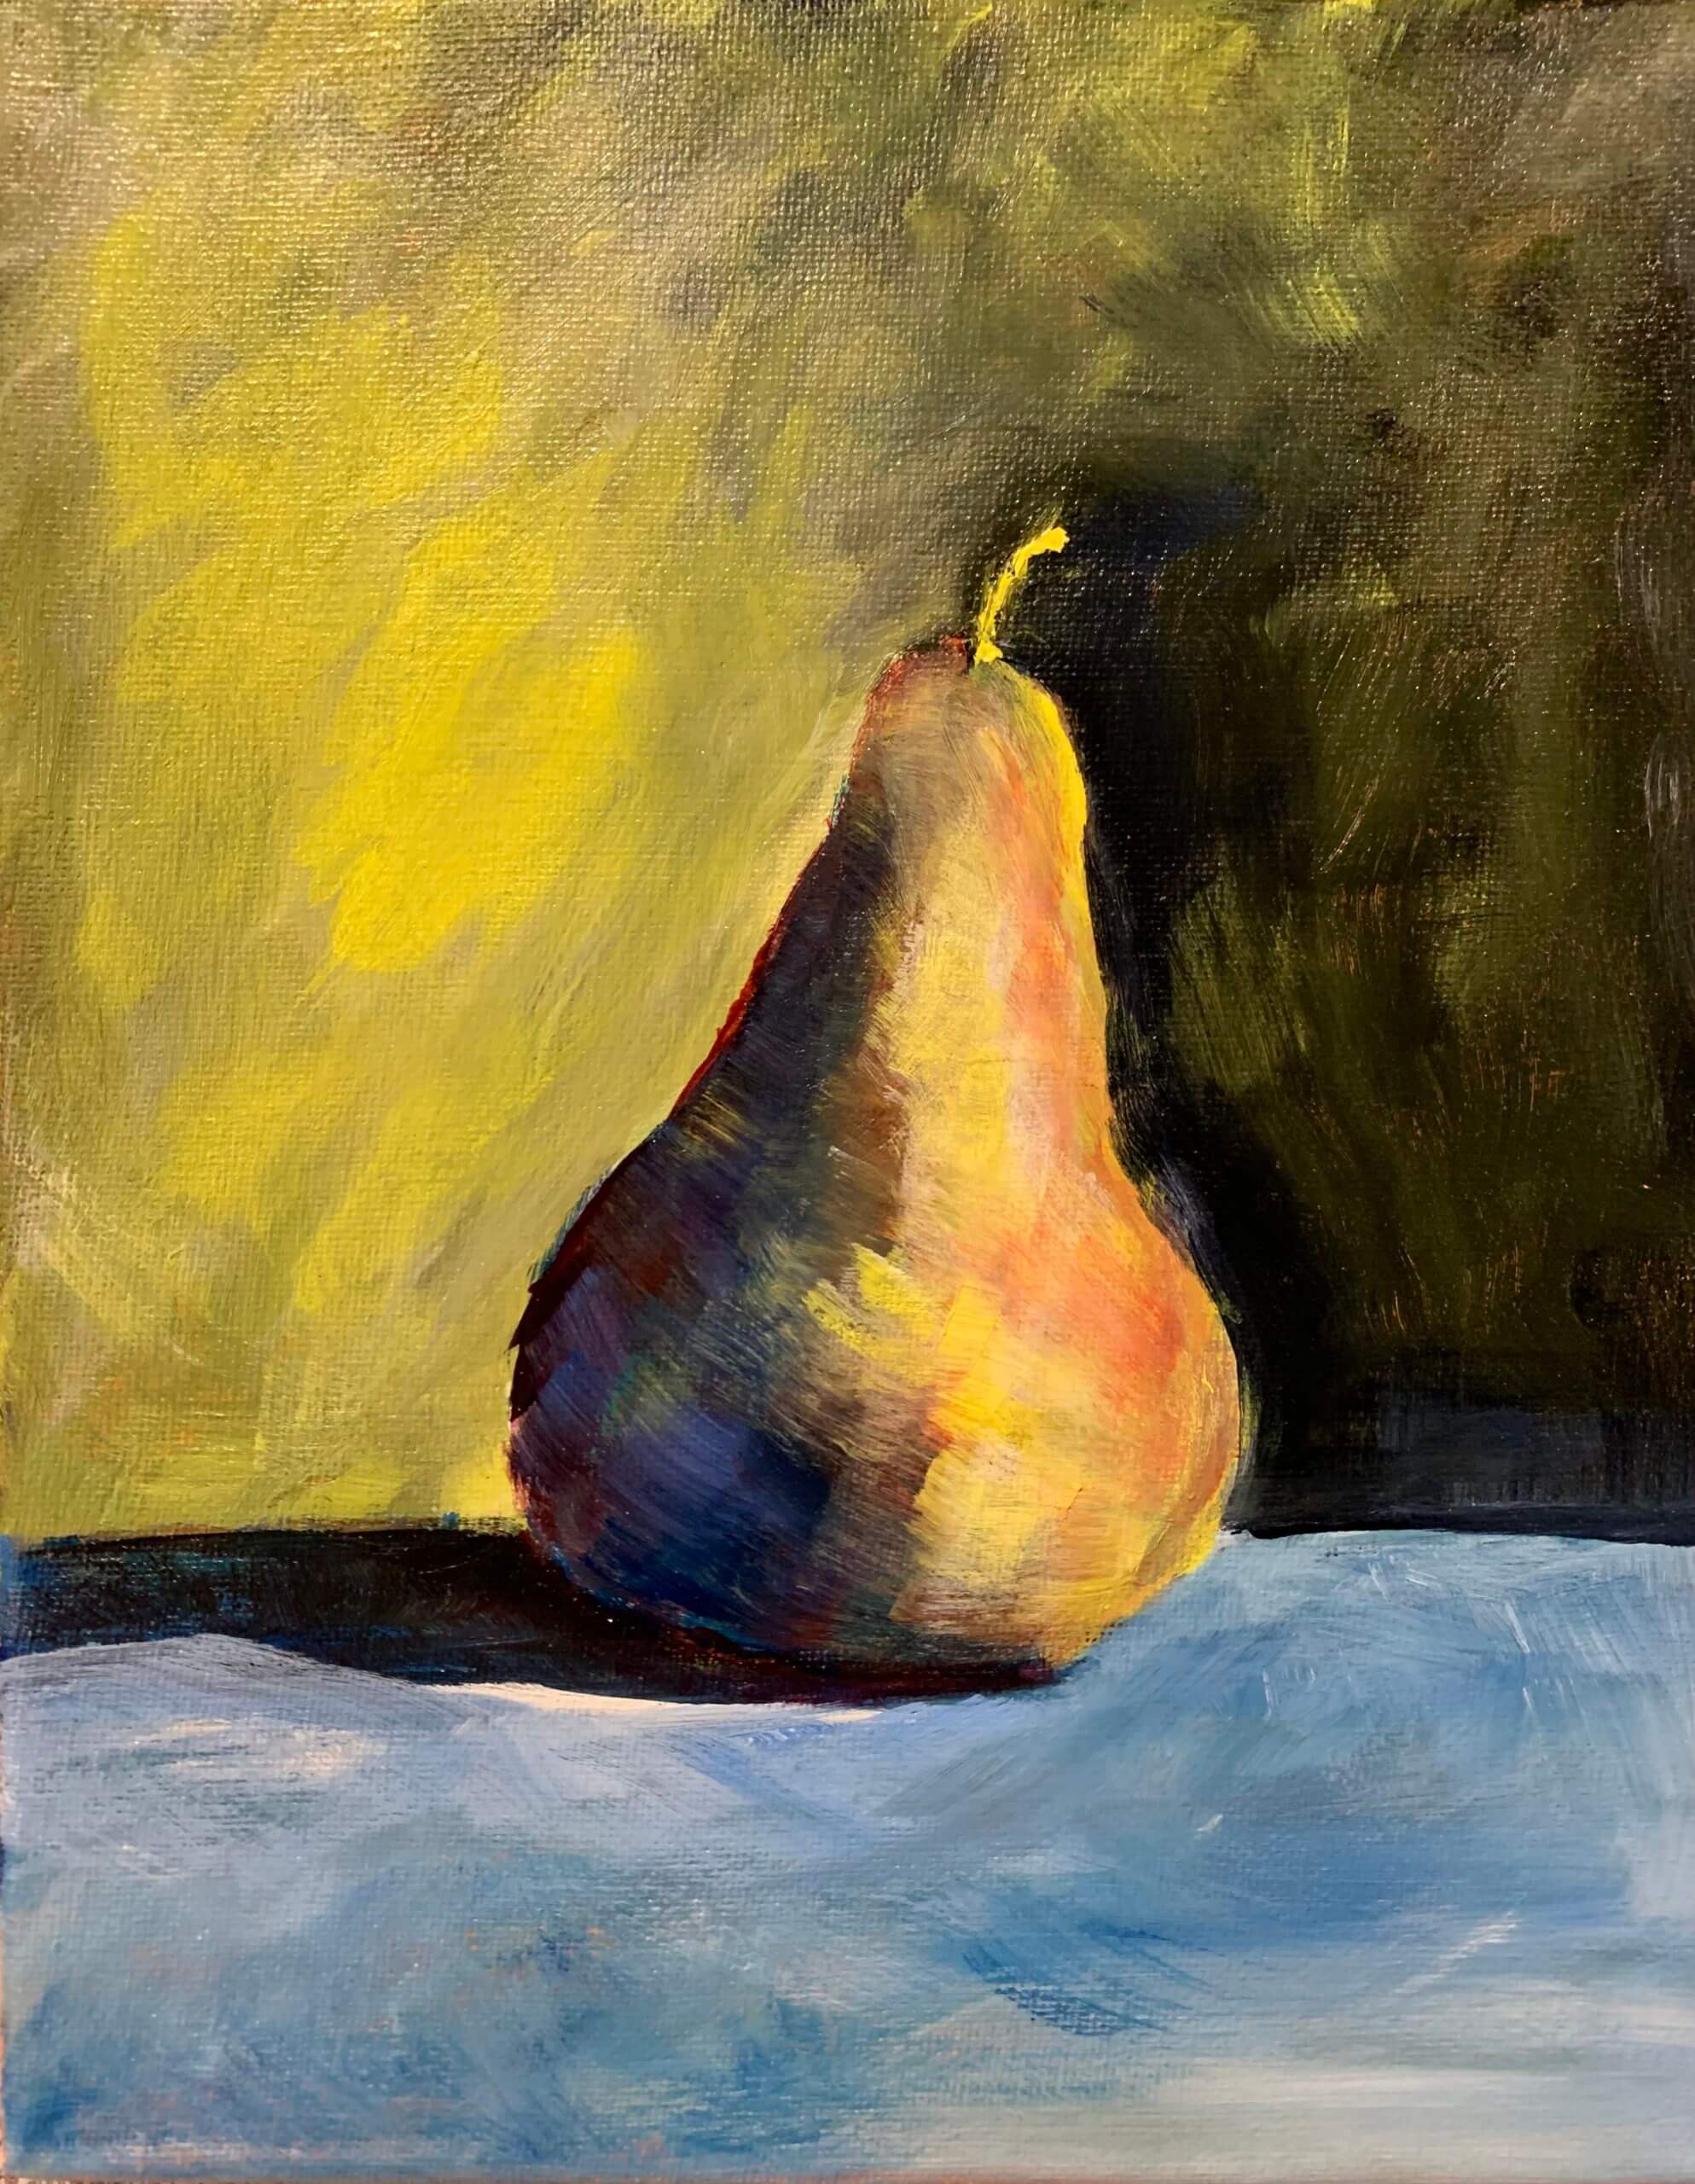 Pear - ORIGINAL